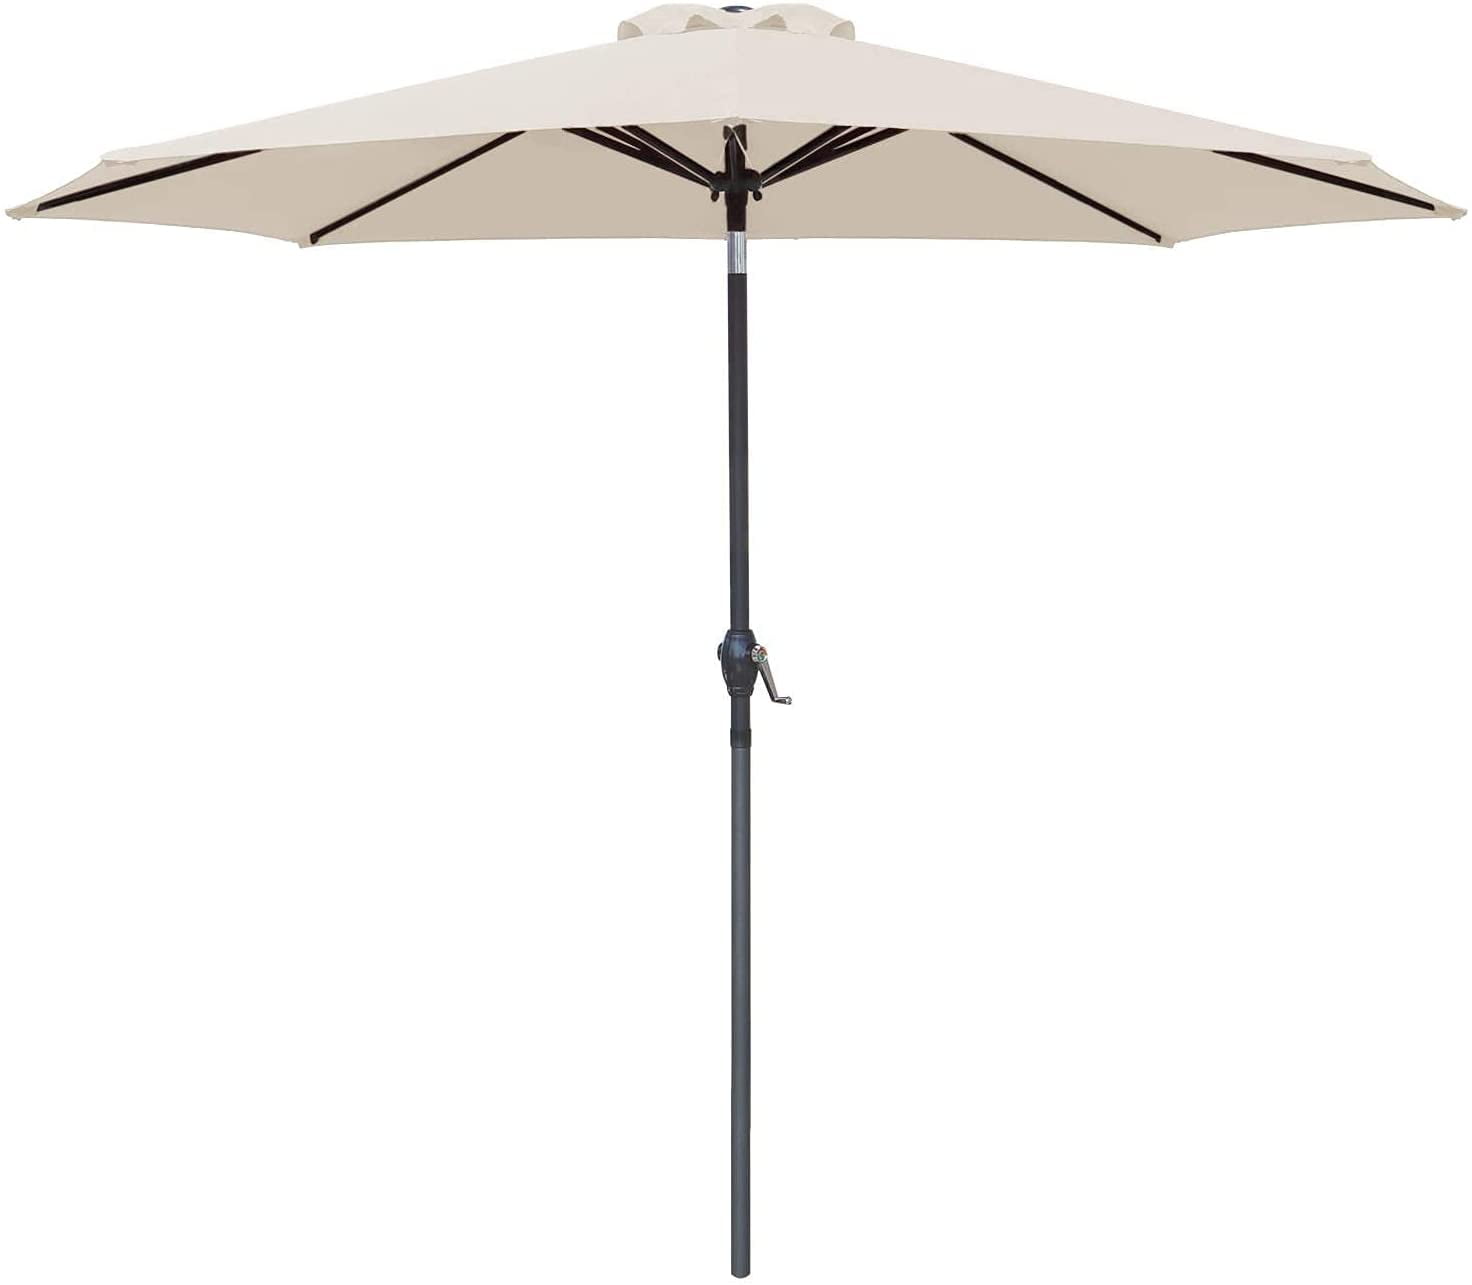 Devoko 9FT Patio Umbrella Outdoor Table Umbrella with 8 Sturdy Ribs, Beige